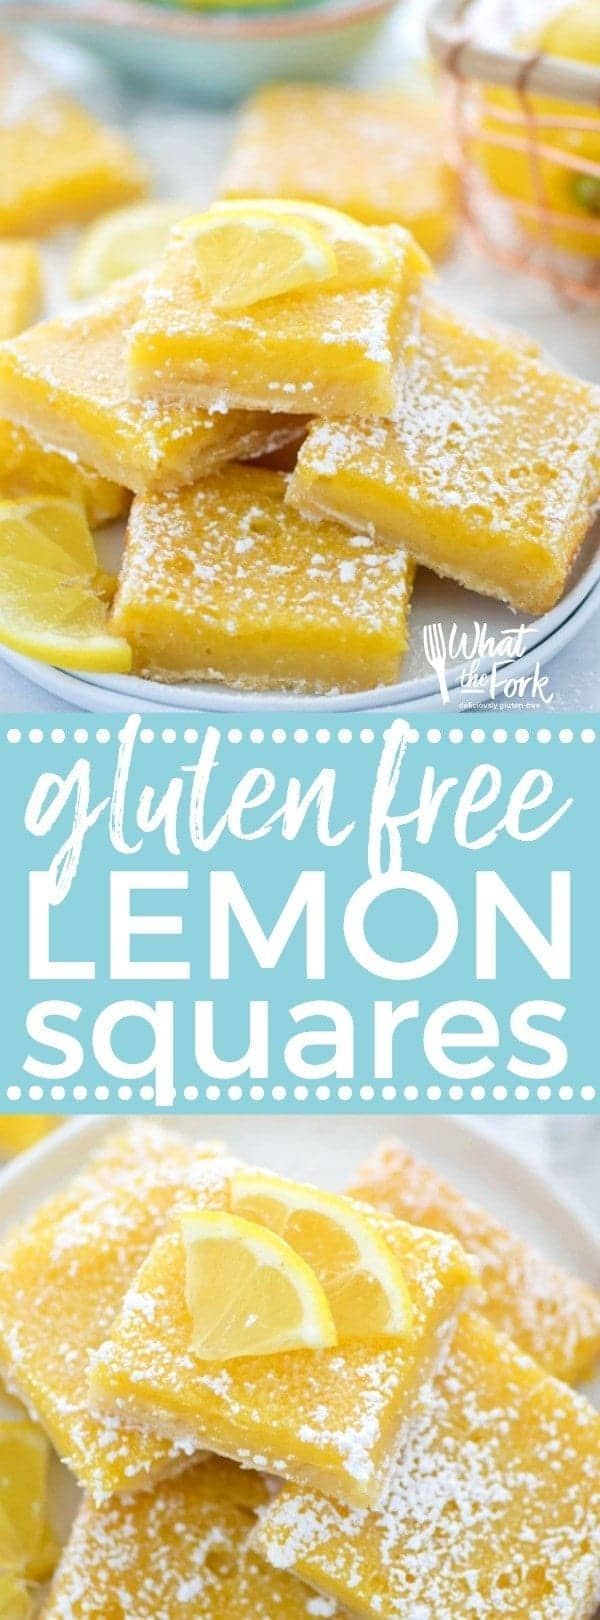 Gluten Free Lemon Squares -   15 spring desserts Gluten Free ideas